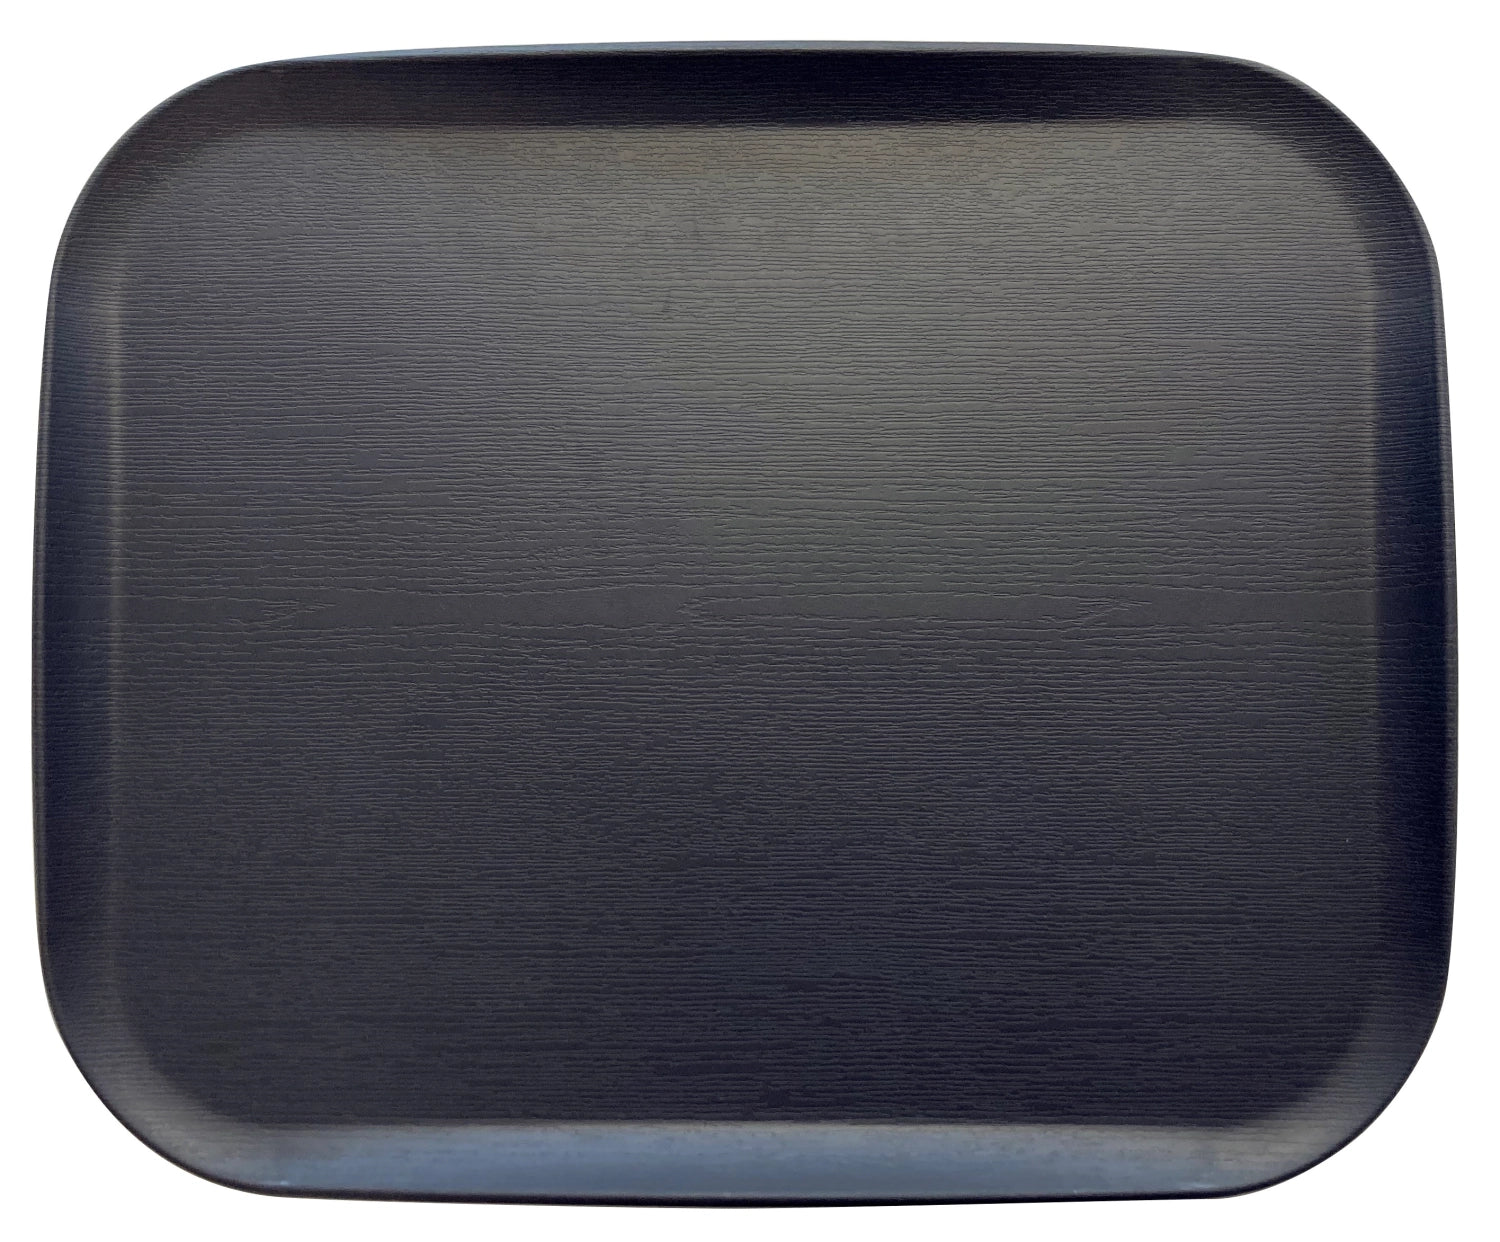 Tablett Rocca GN 1/2 Grain black 32.5x26cm - KAQTU Design